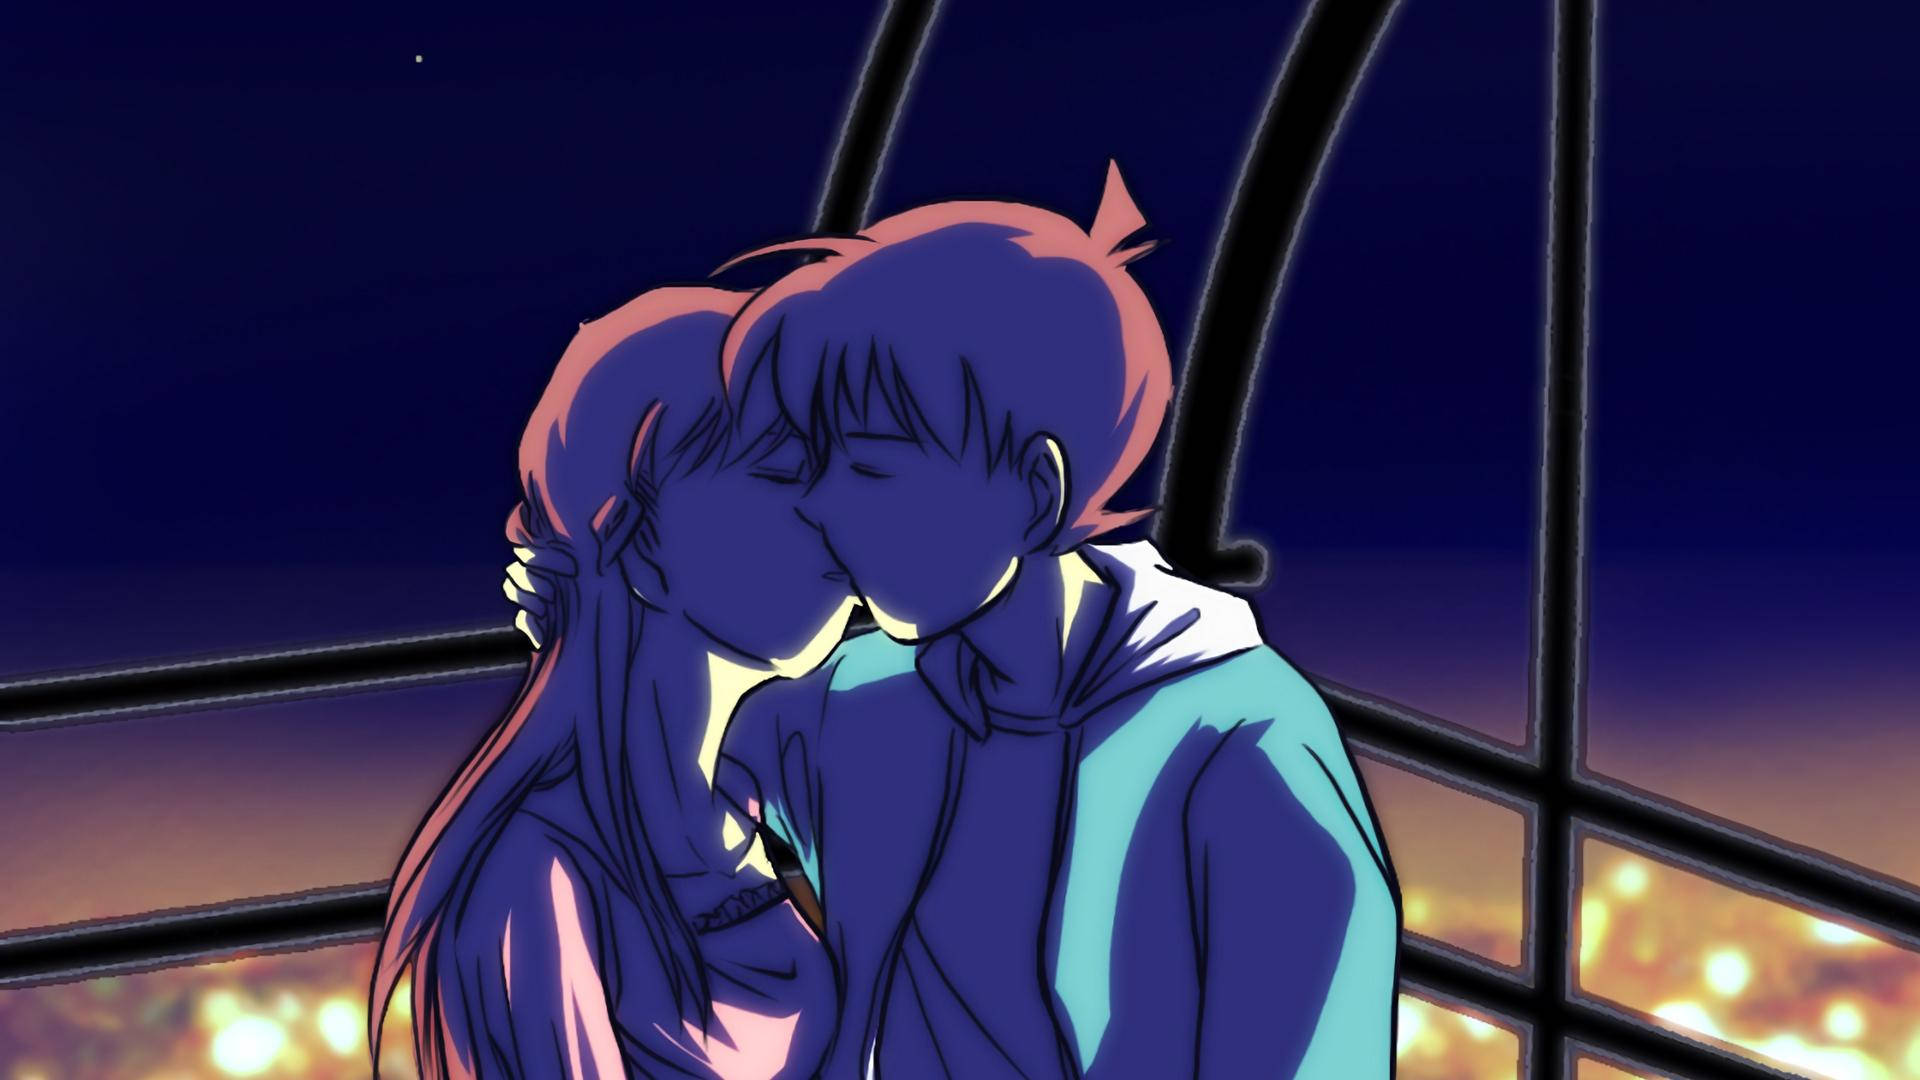 1920x1080 Full Hd Couple Kissing In Ferris Wheel Background